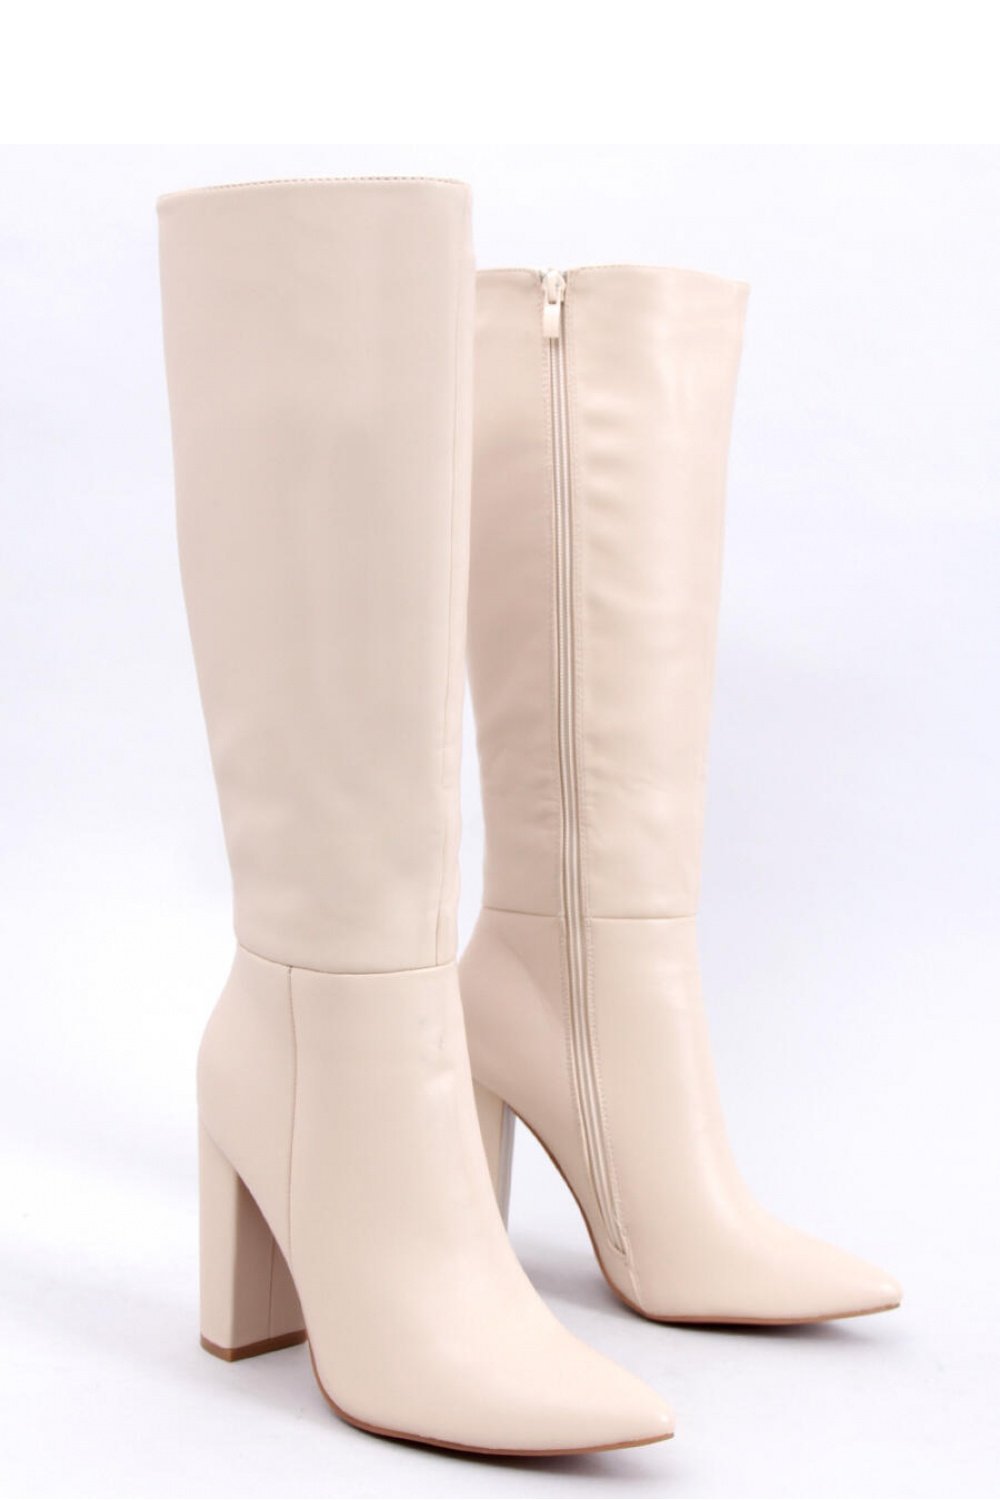 Heel boots model 171601 Inello Posh Styles Apparel